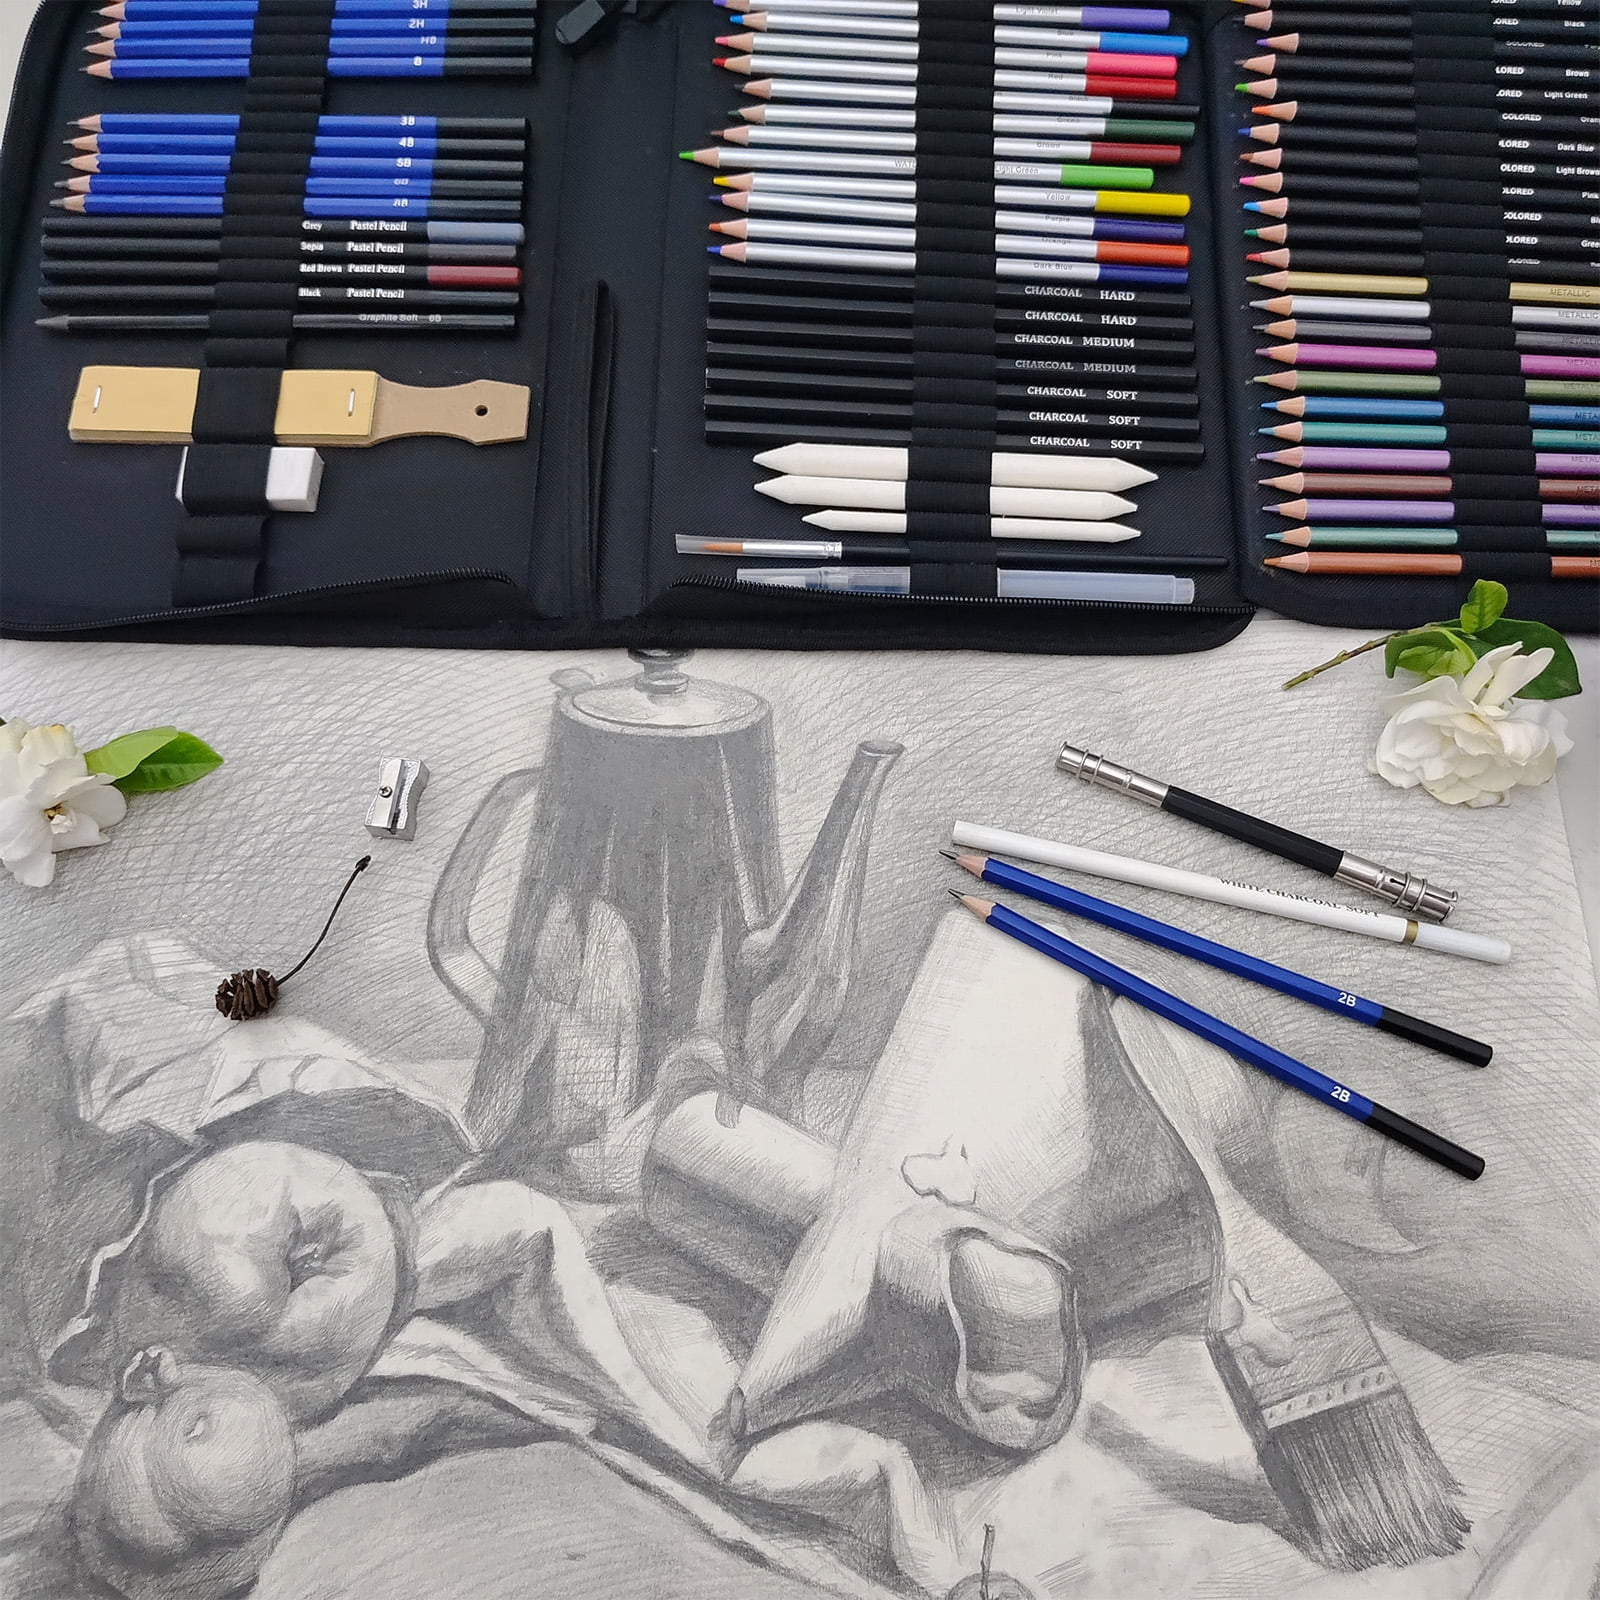 Vnzil 72 Pack Drawing Set Sketching Kit, Art Supplies for Artists